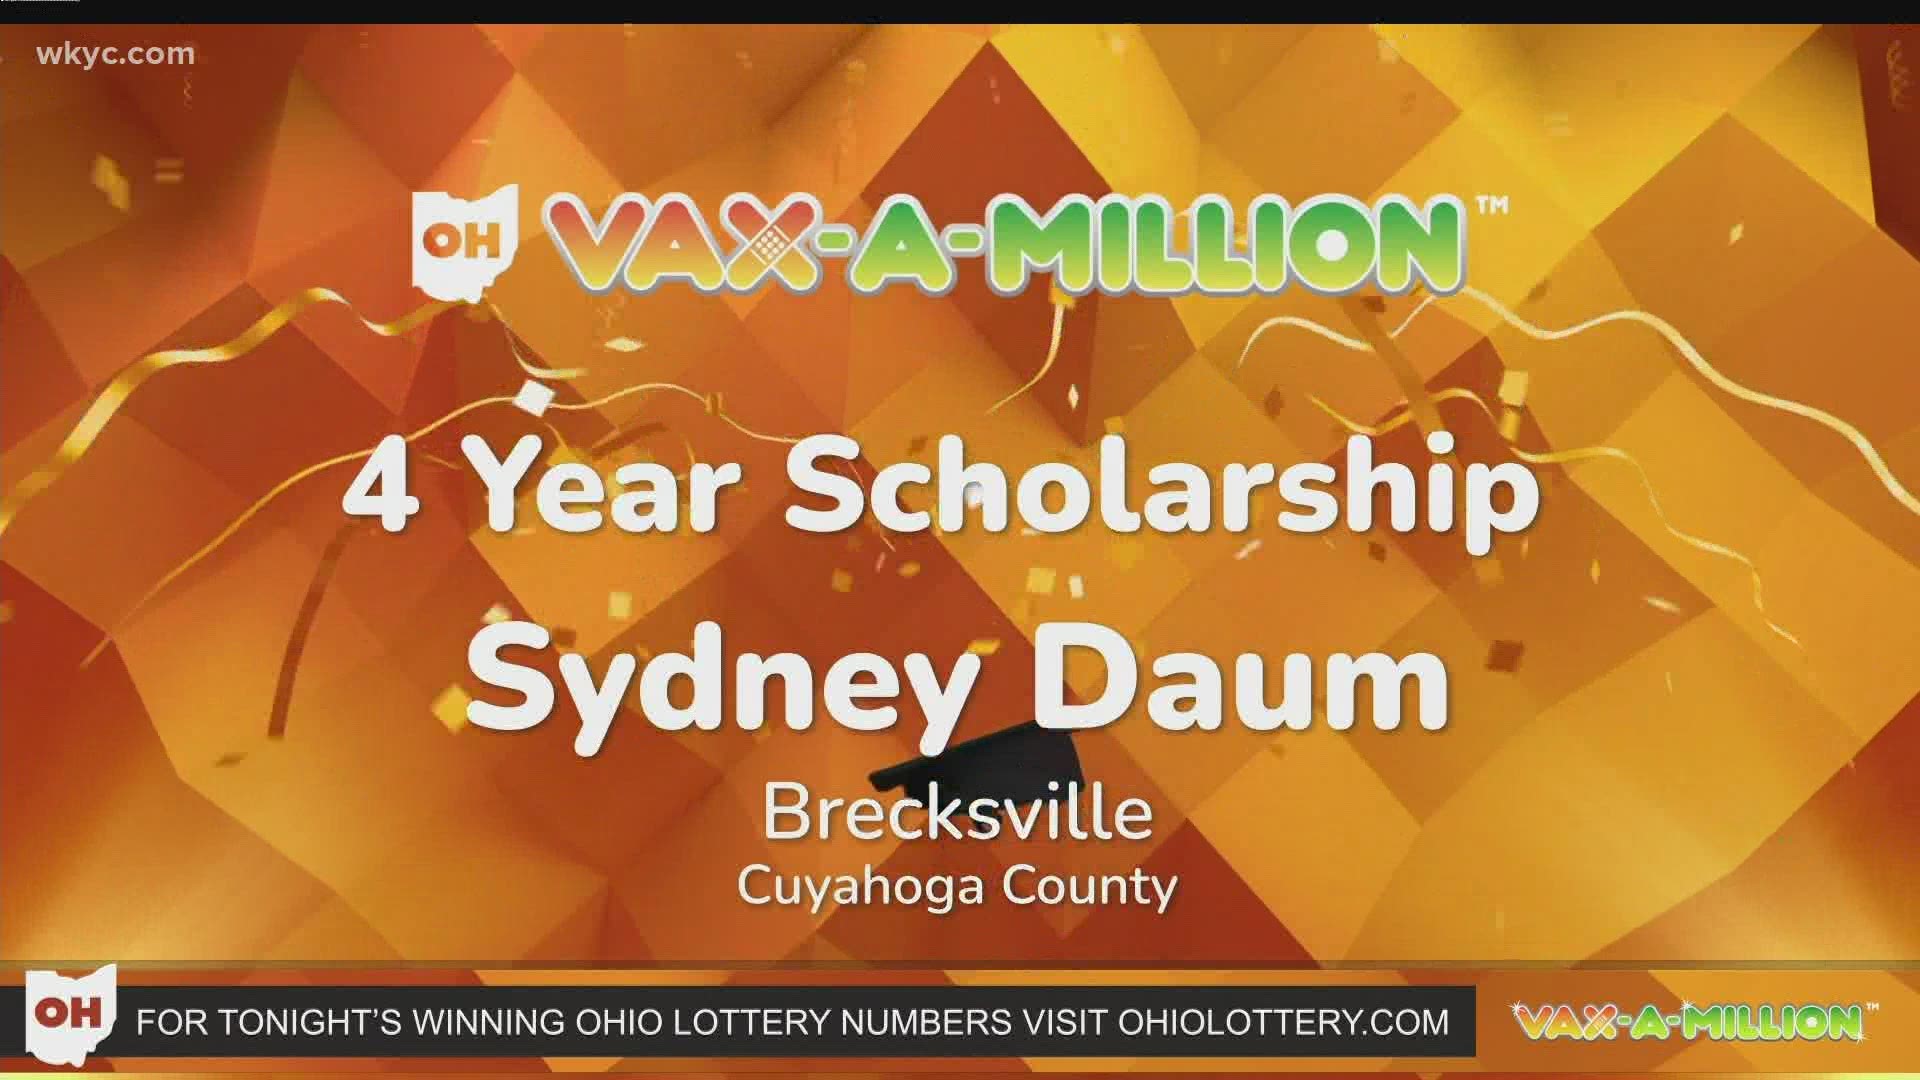 The final million dollar prize was won by Cincinnati's Esperanza Diaz. Sydney Daum of Brecksville captured the full-ride college scholarship.